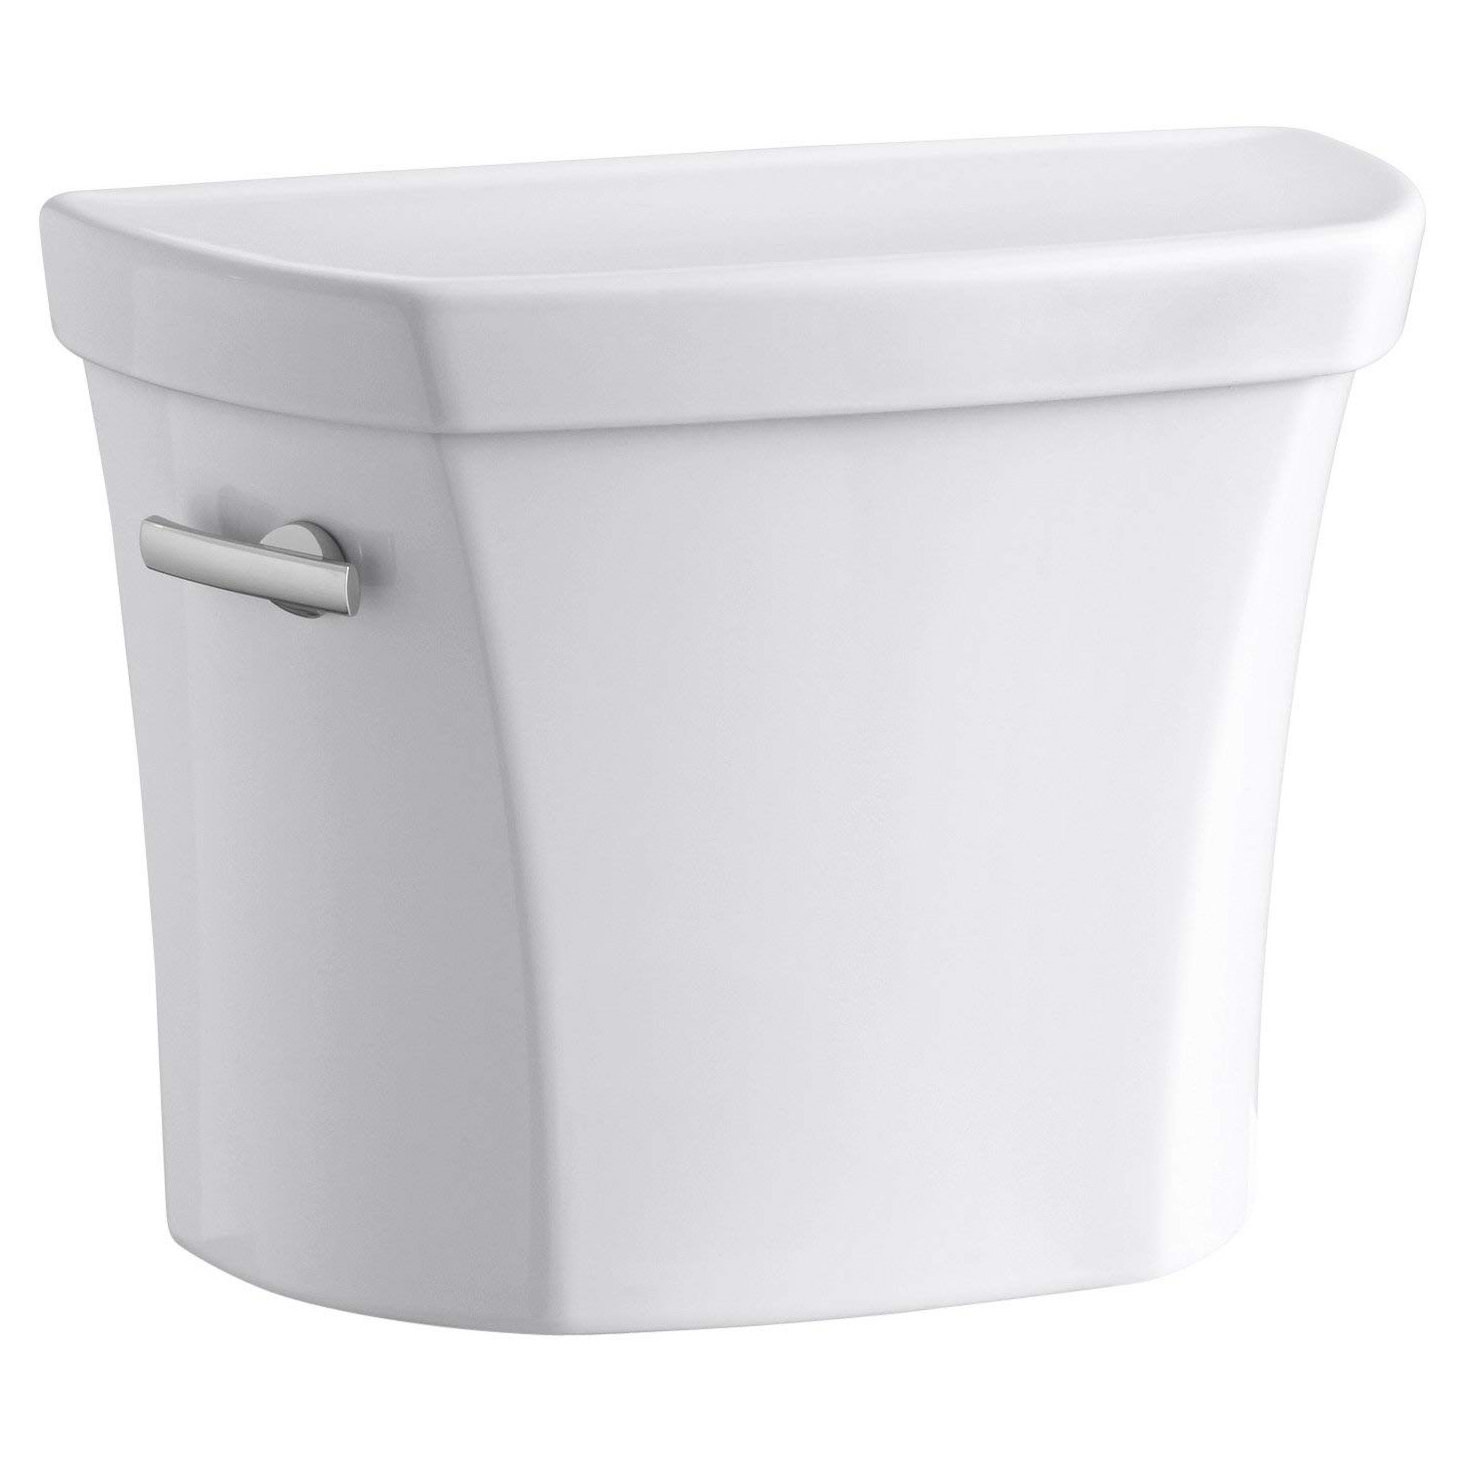 Wellworth 1.28 gpf Toilet Tank w/Locks in White